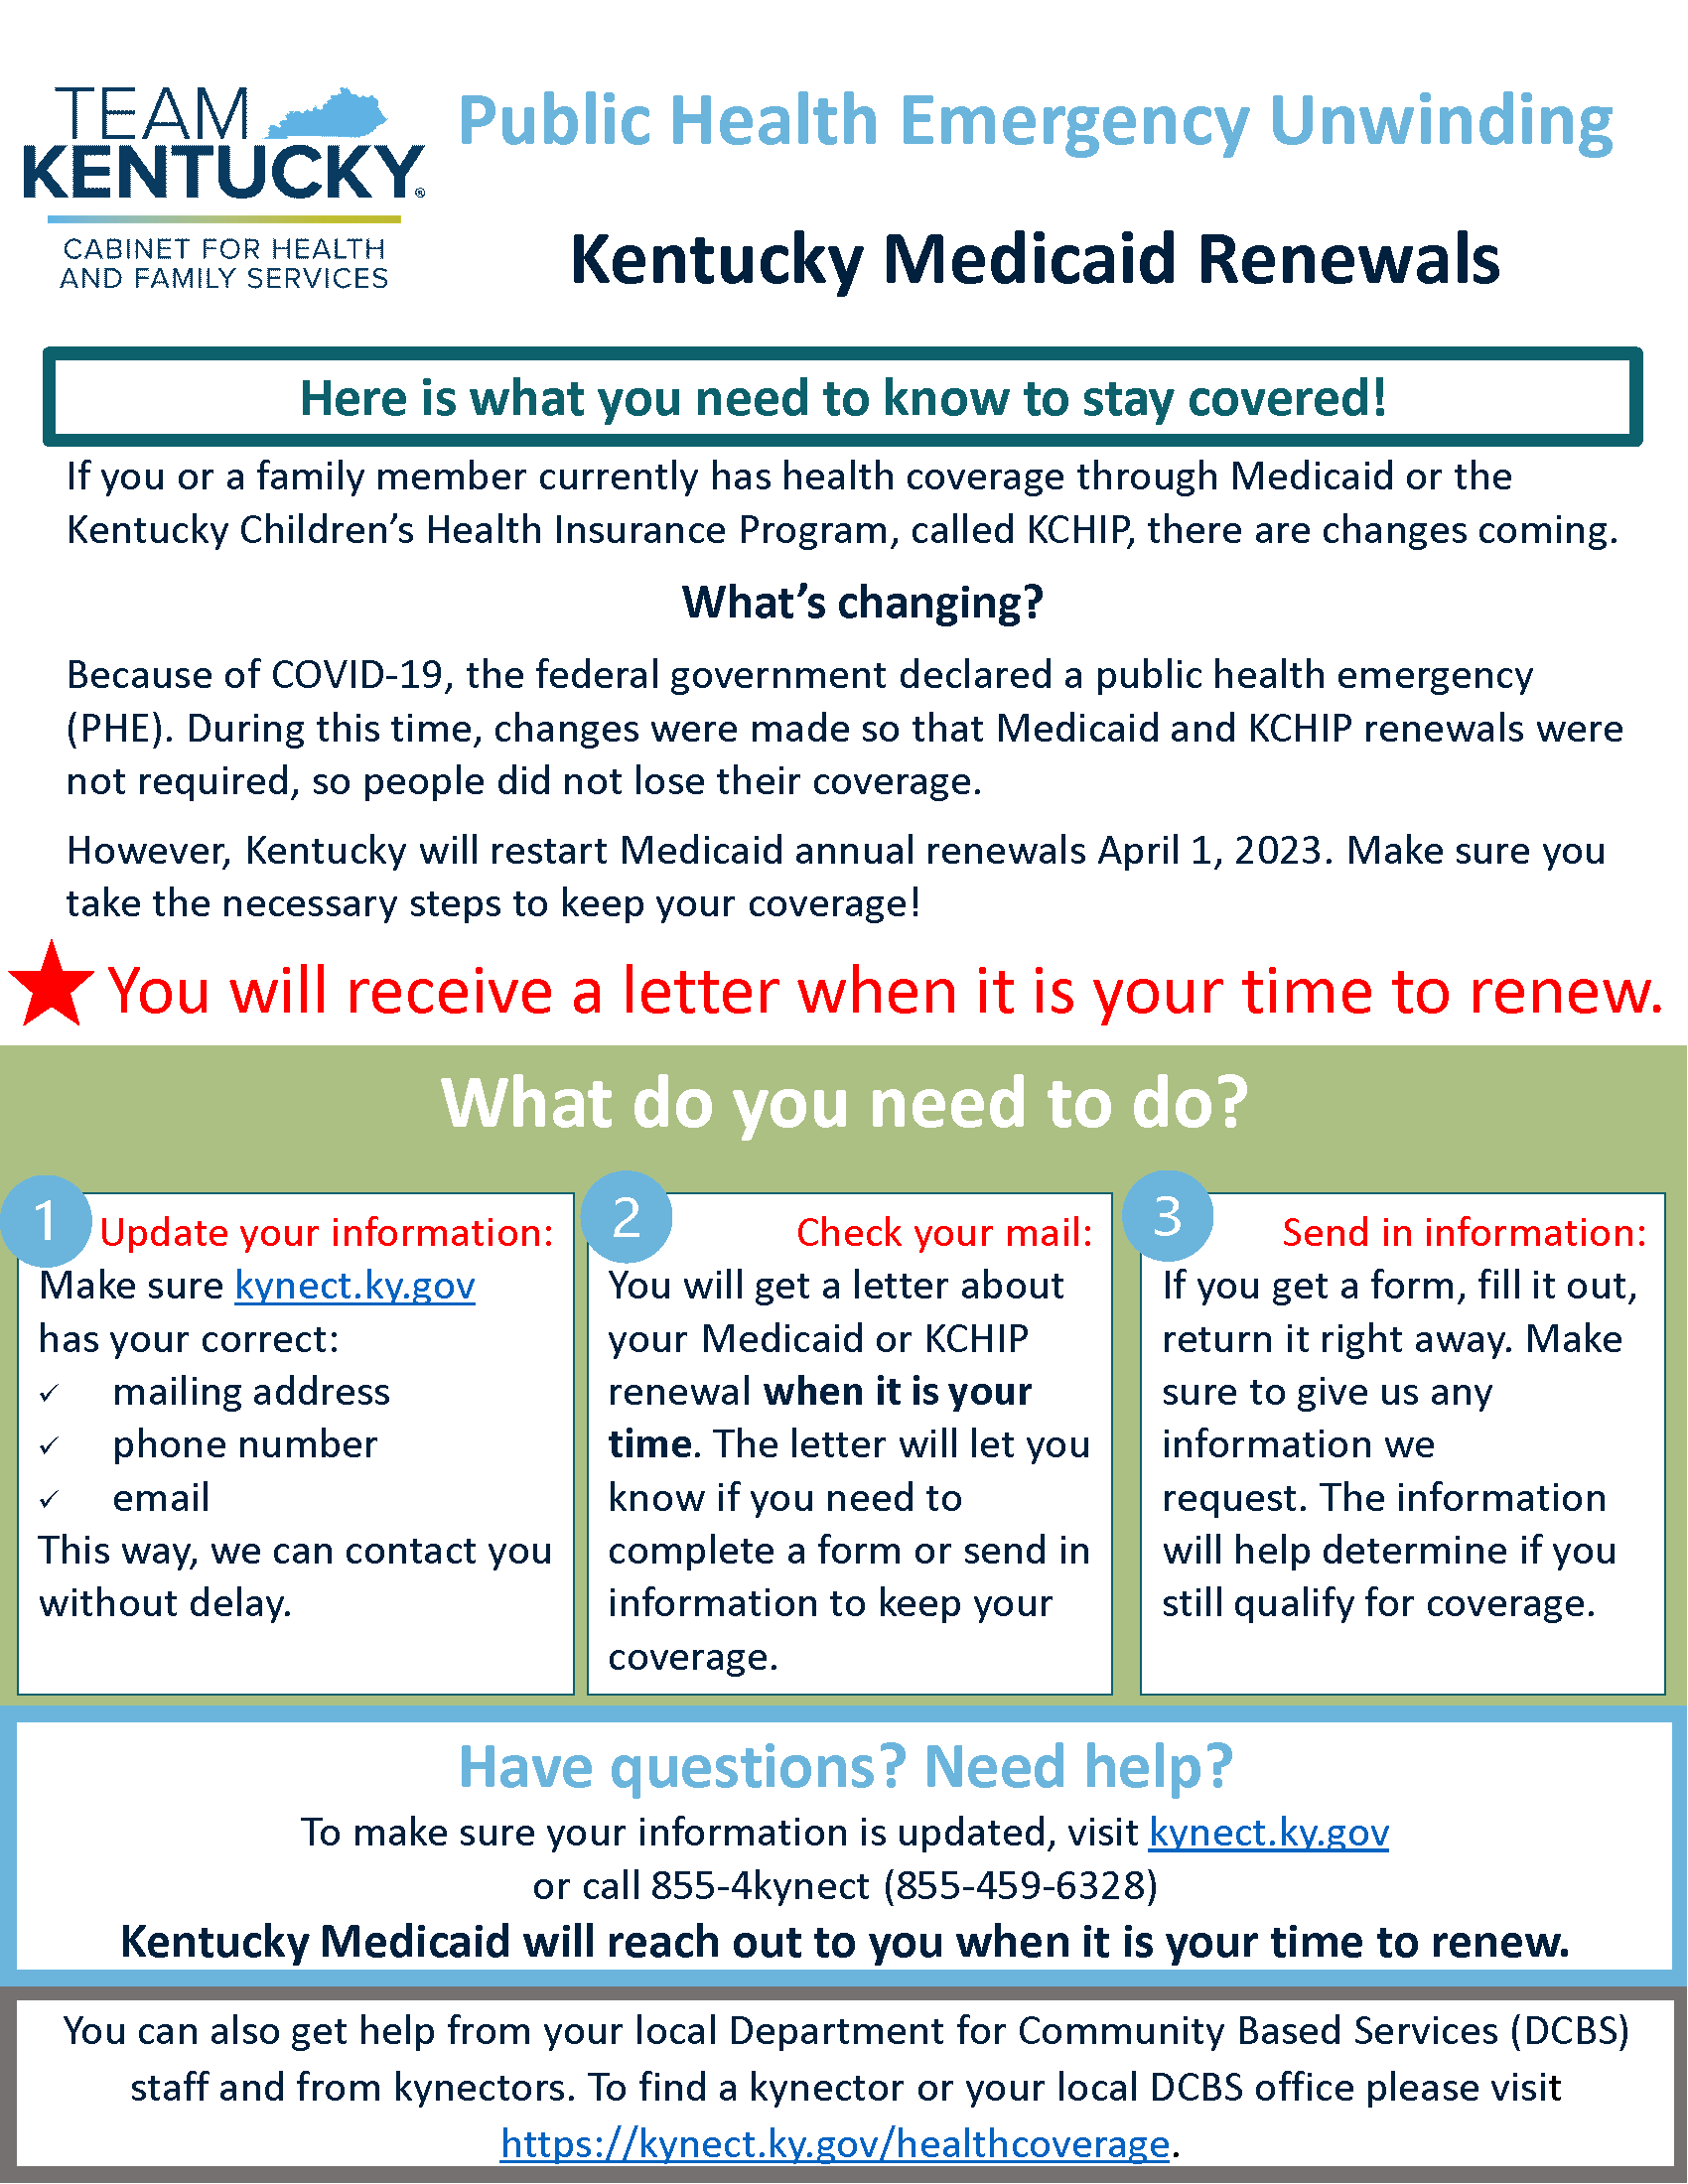 Public Health Emergency Unwinding Kentucky Medicaid Renewals KYSPIN